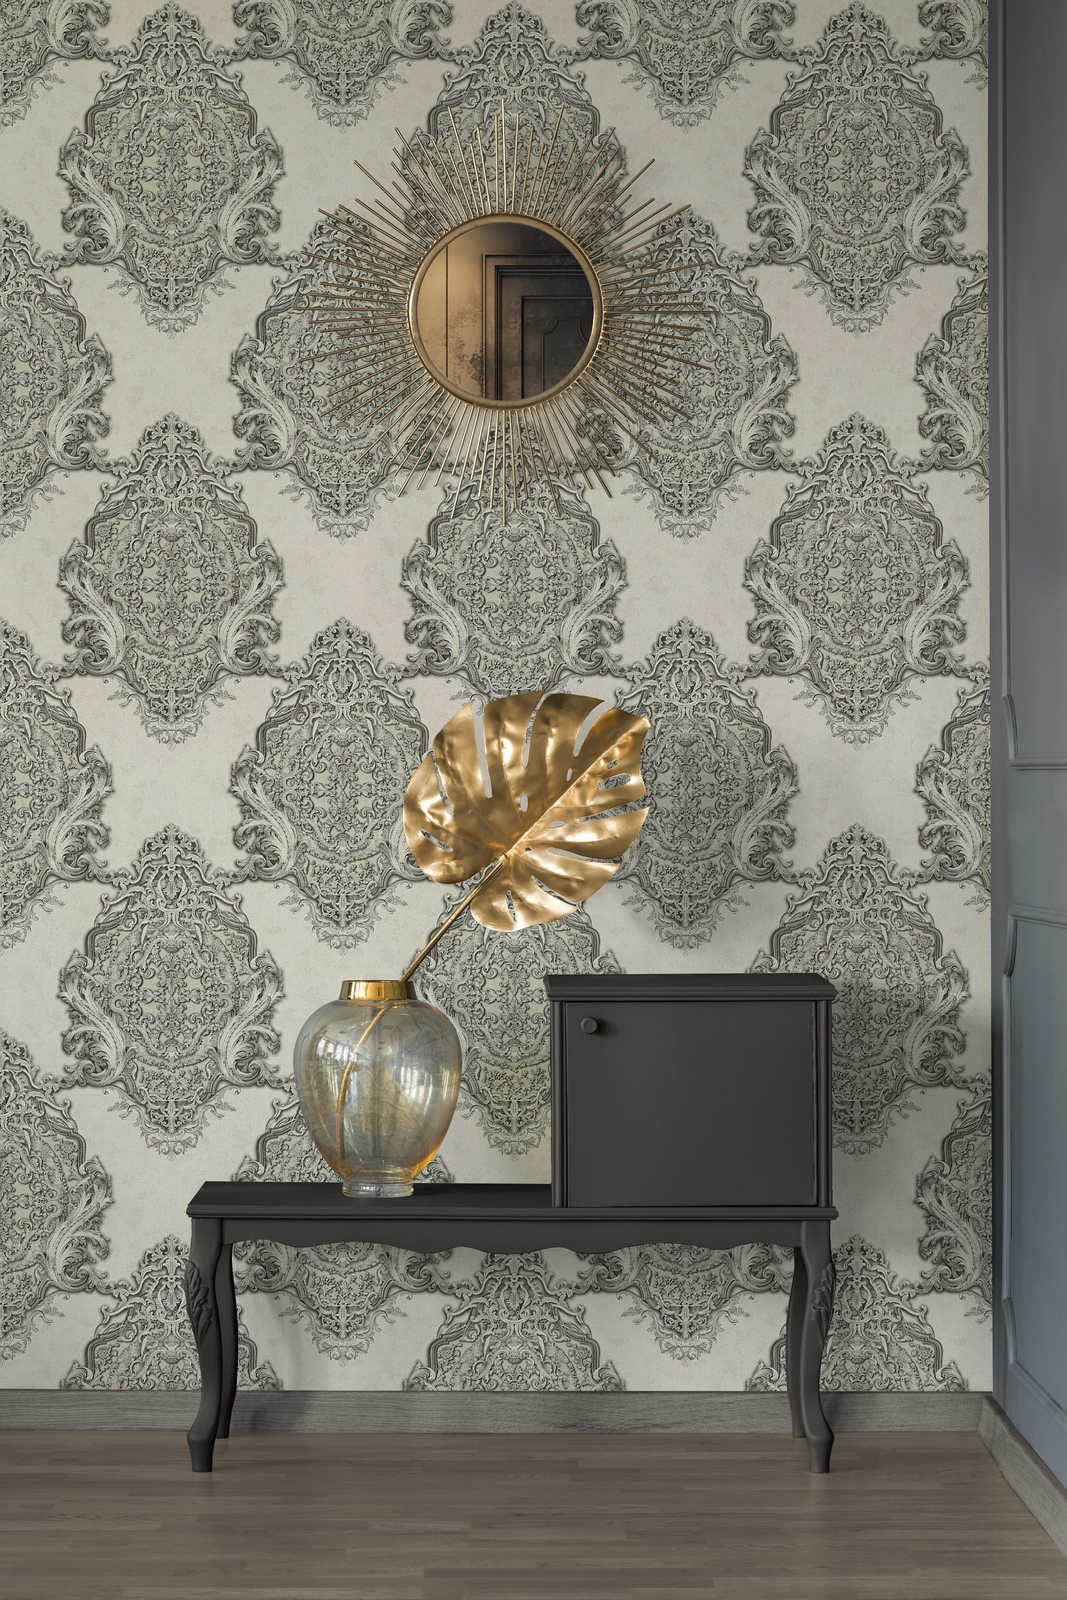             Ornament wallpaper with filigree metallic design - beige, grey
        